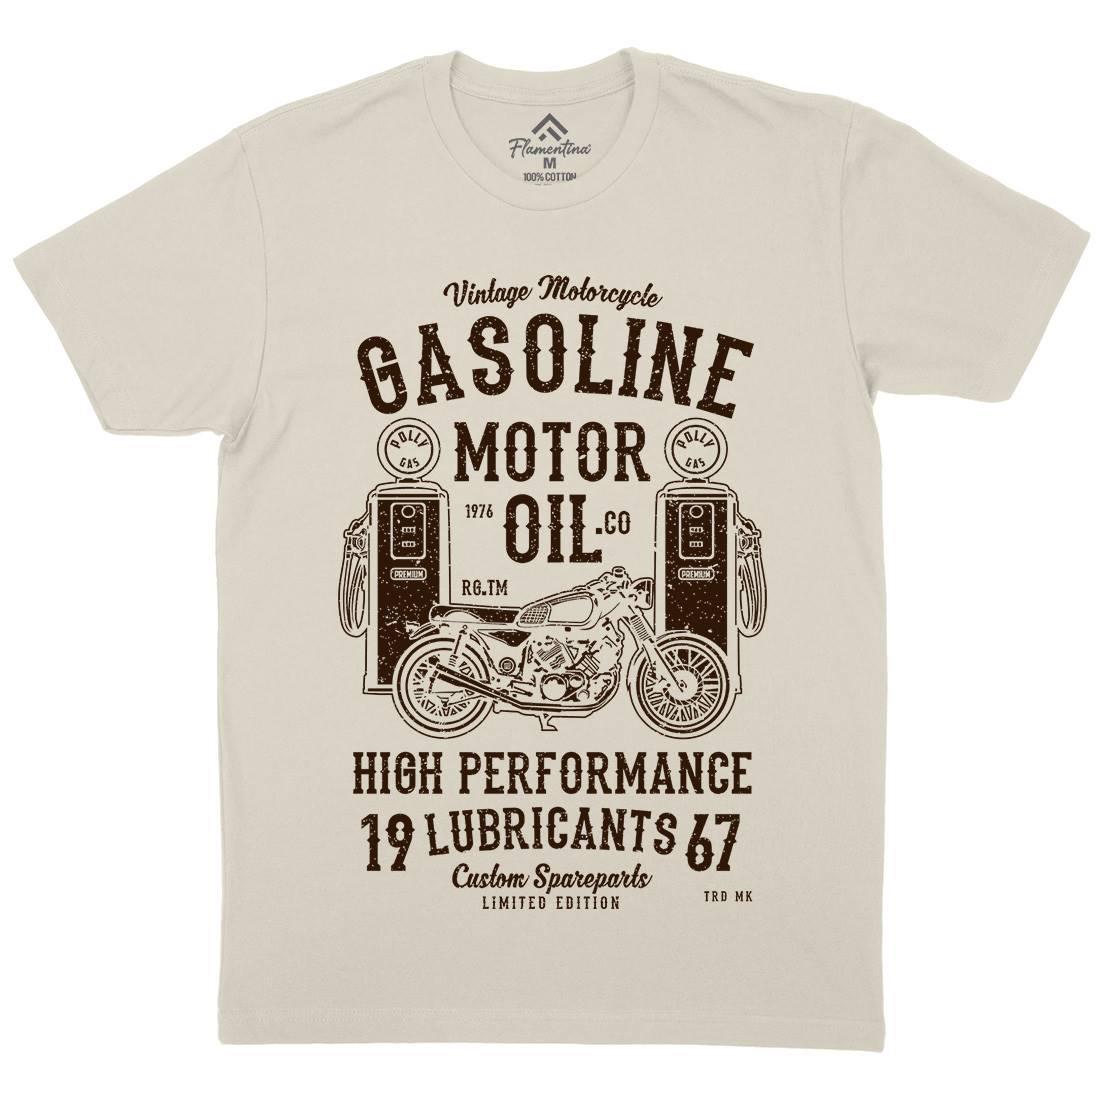 Gasoline Motor Oil Mens Organic Crew Neck T-Shirt Motorcycles A669